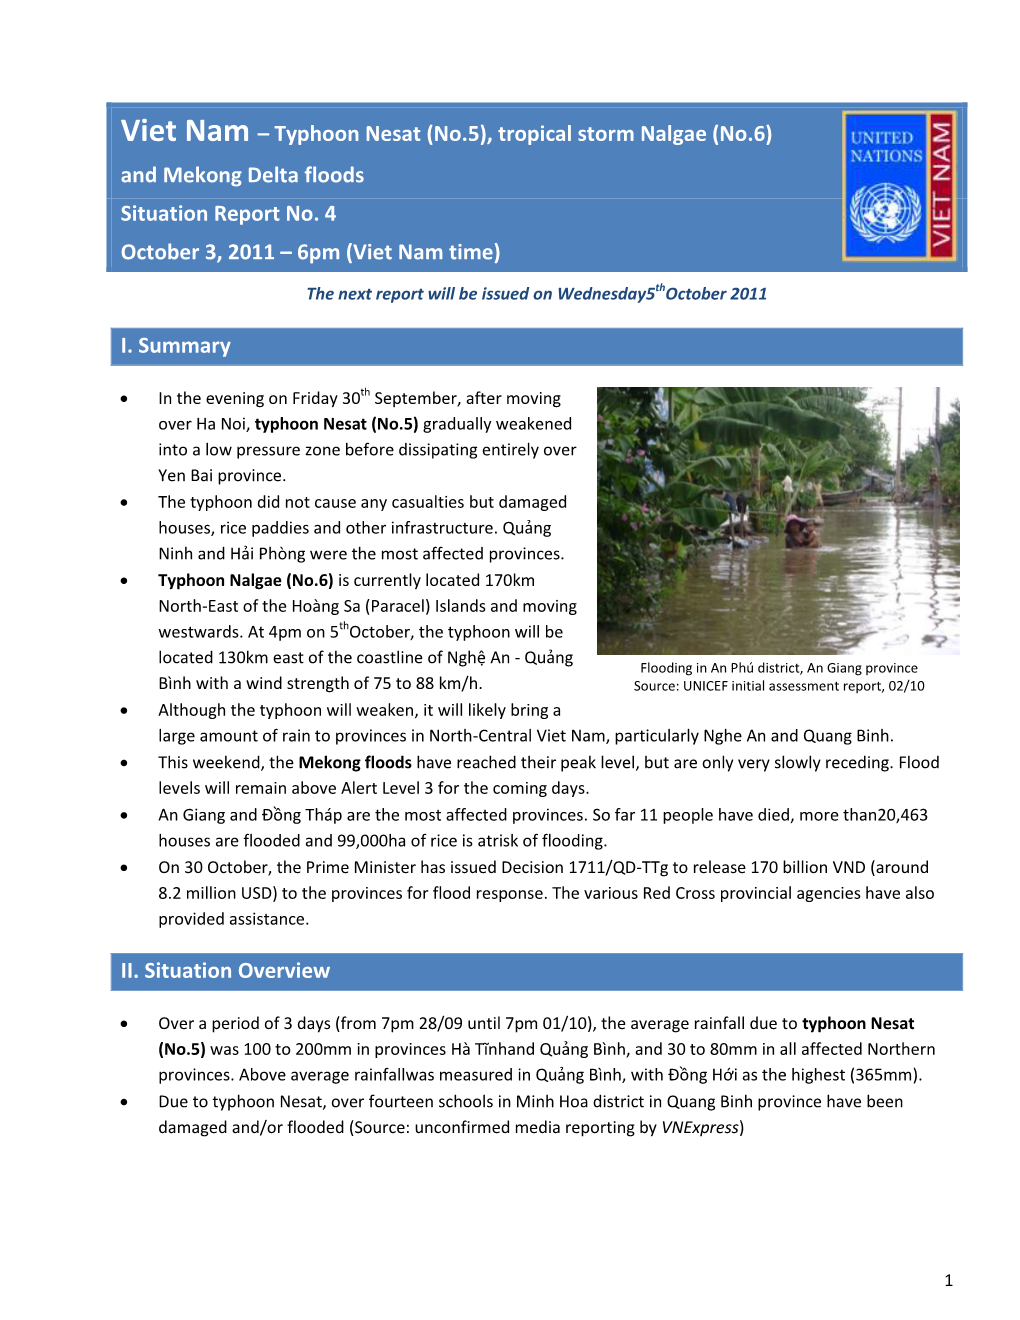 Viet Nam – Typhoon Nesat (No.5), Tropical Storm Nalgae (No.6) and Mekong Delta Floods Situation Report No